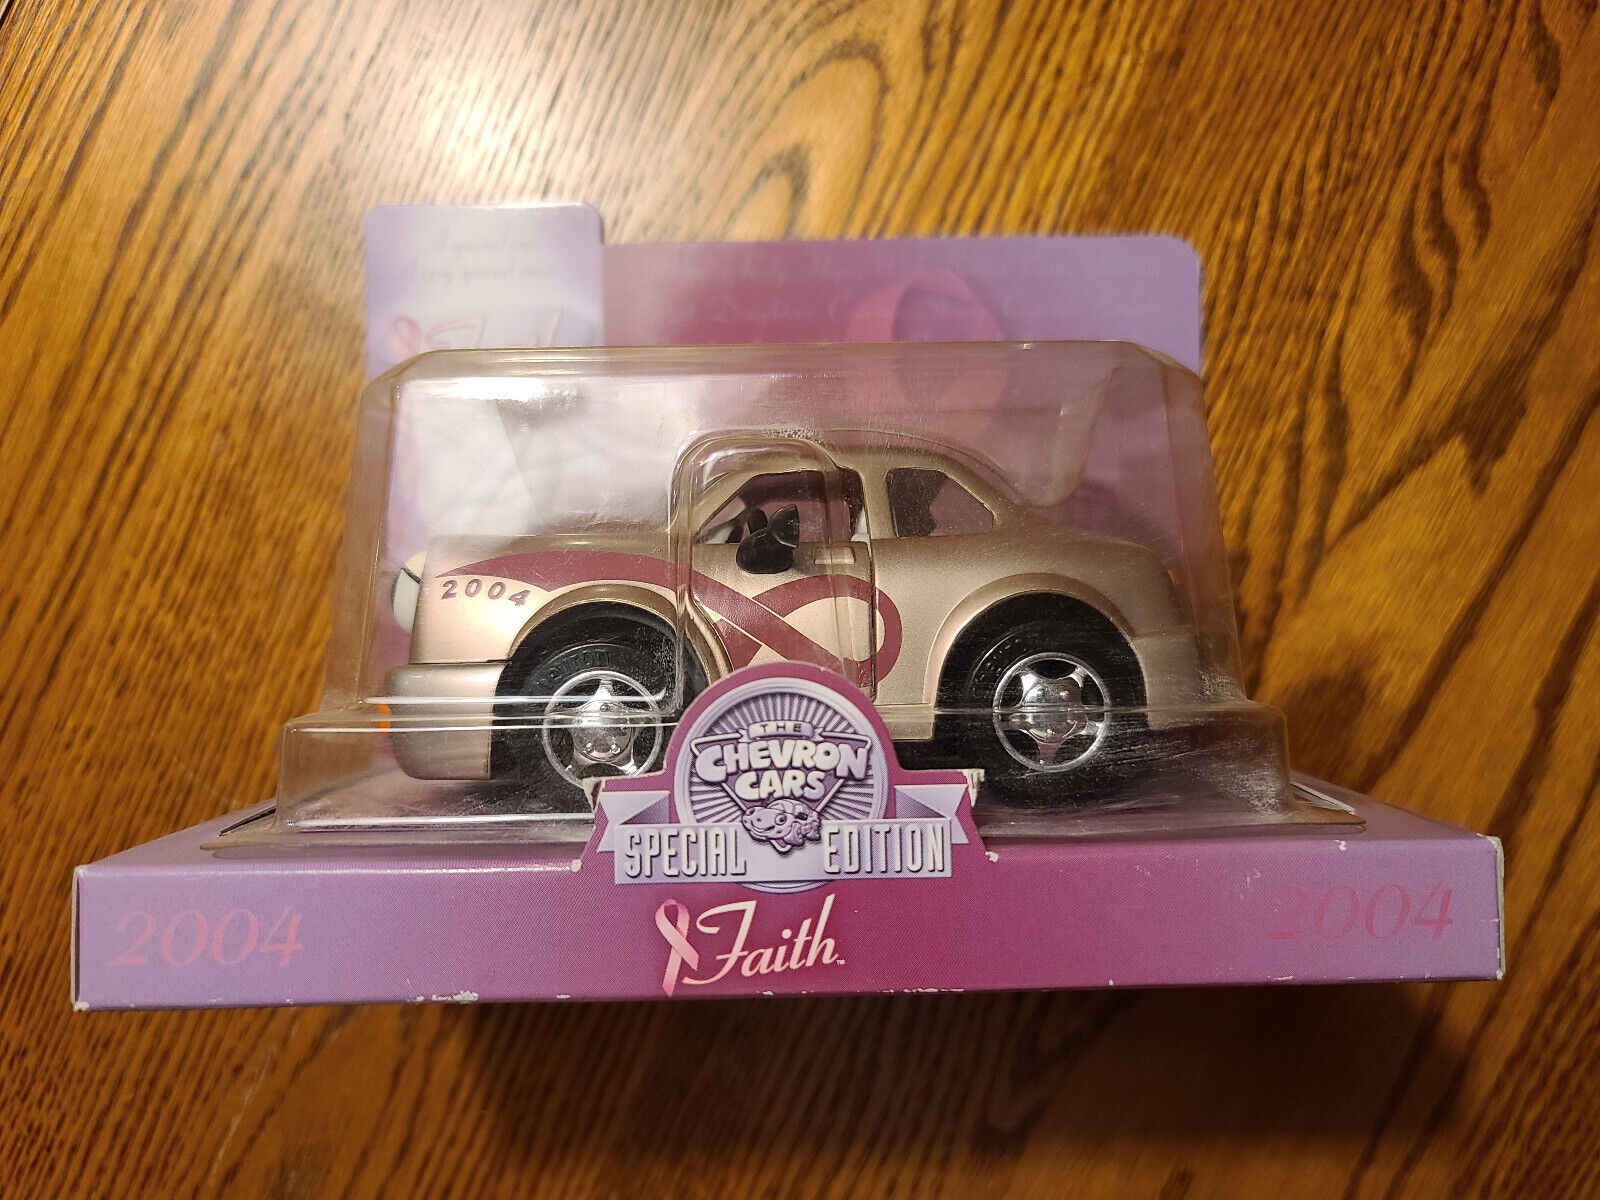 FAITH SPECIAL EDITION Chevron Car Collectible Toy Car **Sealed** Breast Cancer - $26.99